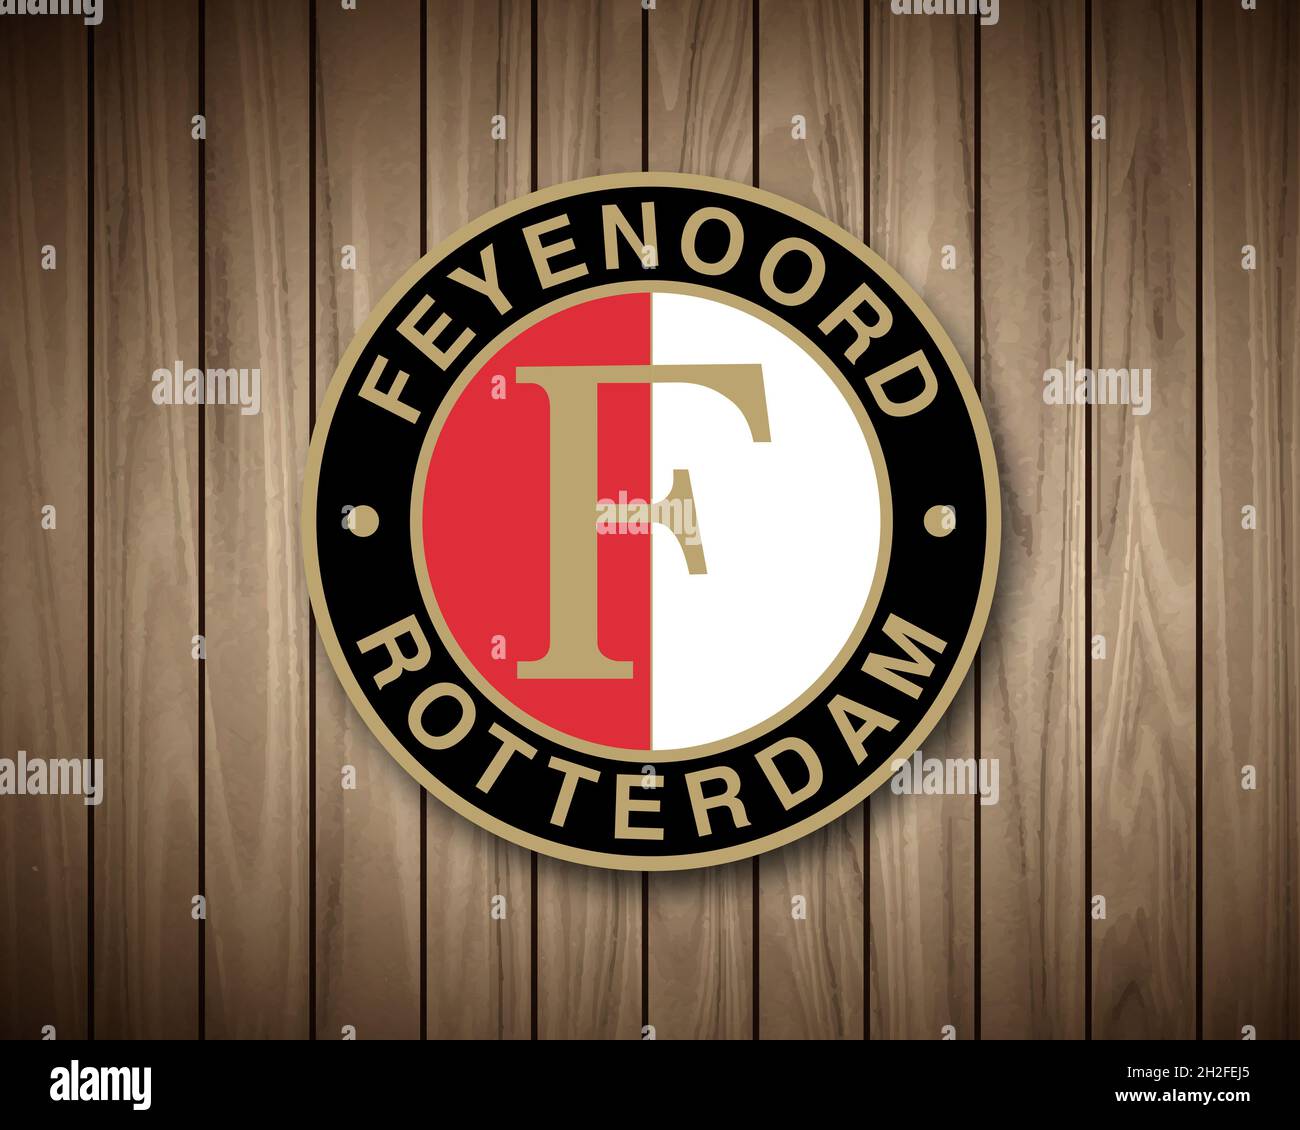 Feyenoord Rotterdam - Club profile